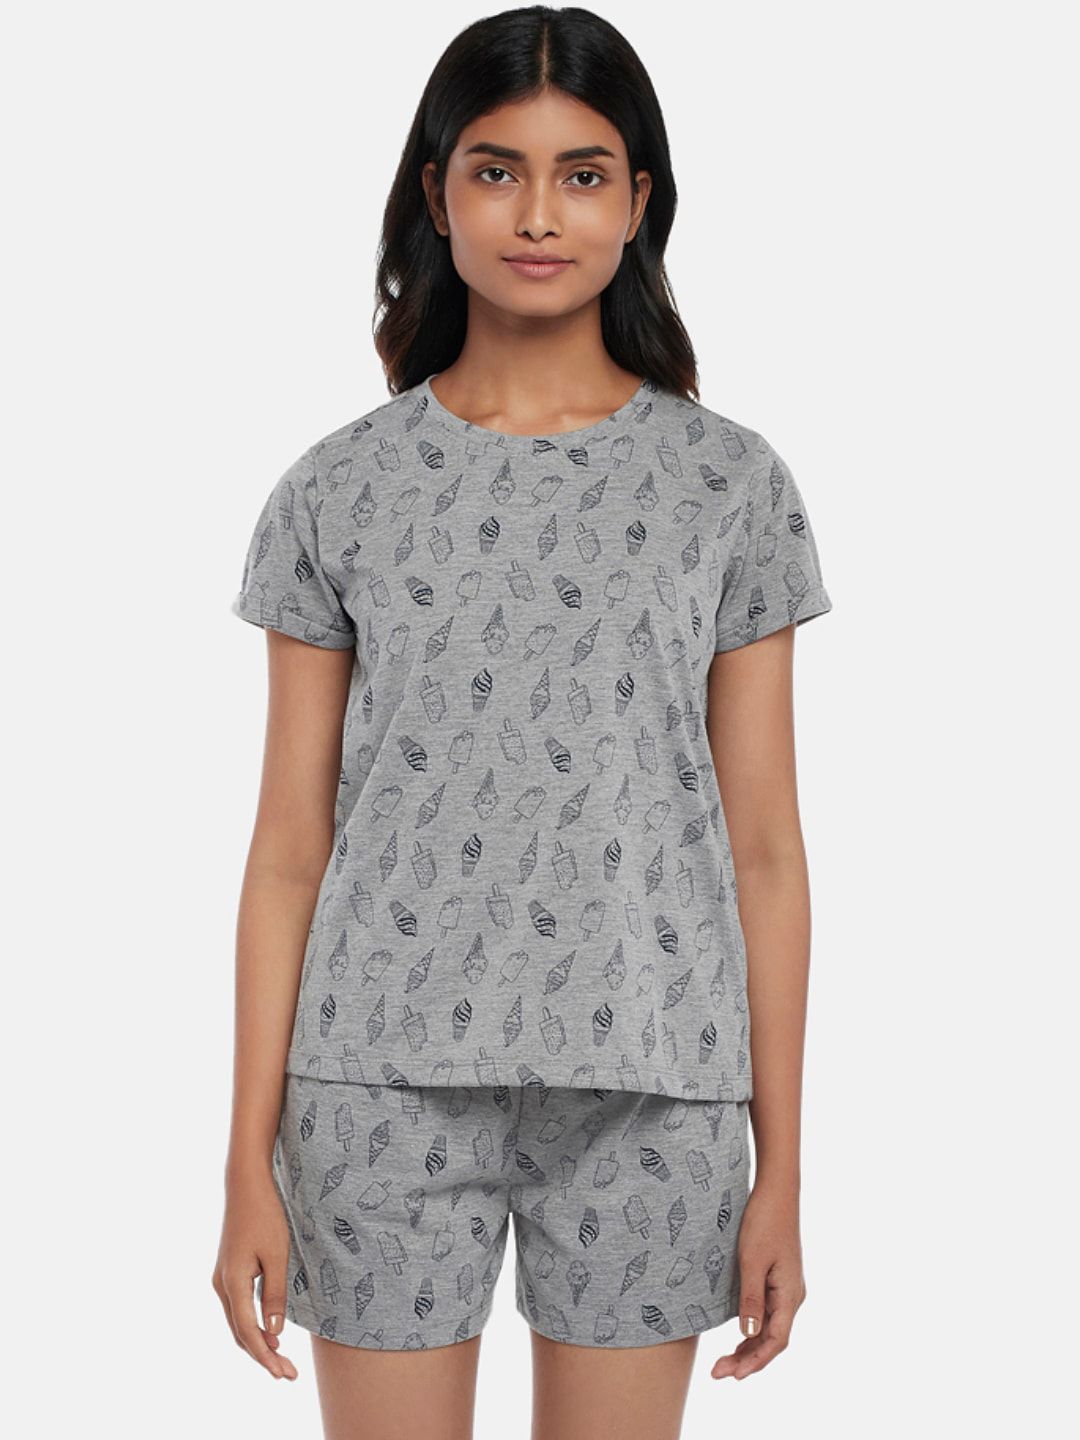 Dreamz by Pantaloons Women Grey Melange Printed Night suit Price in India